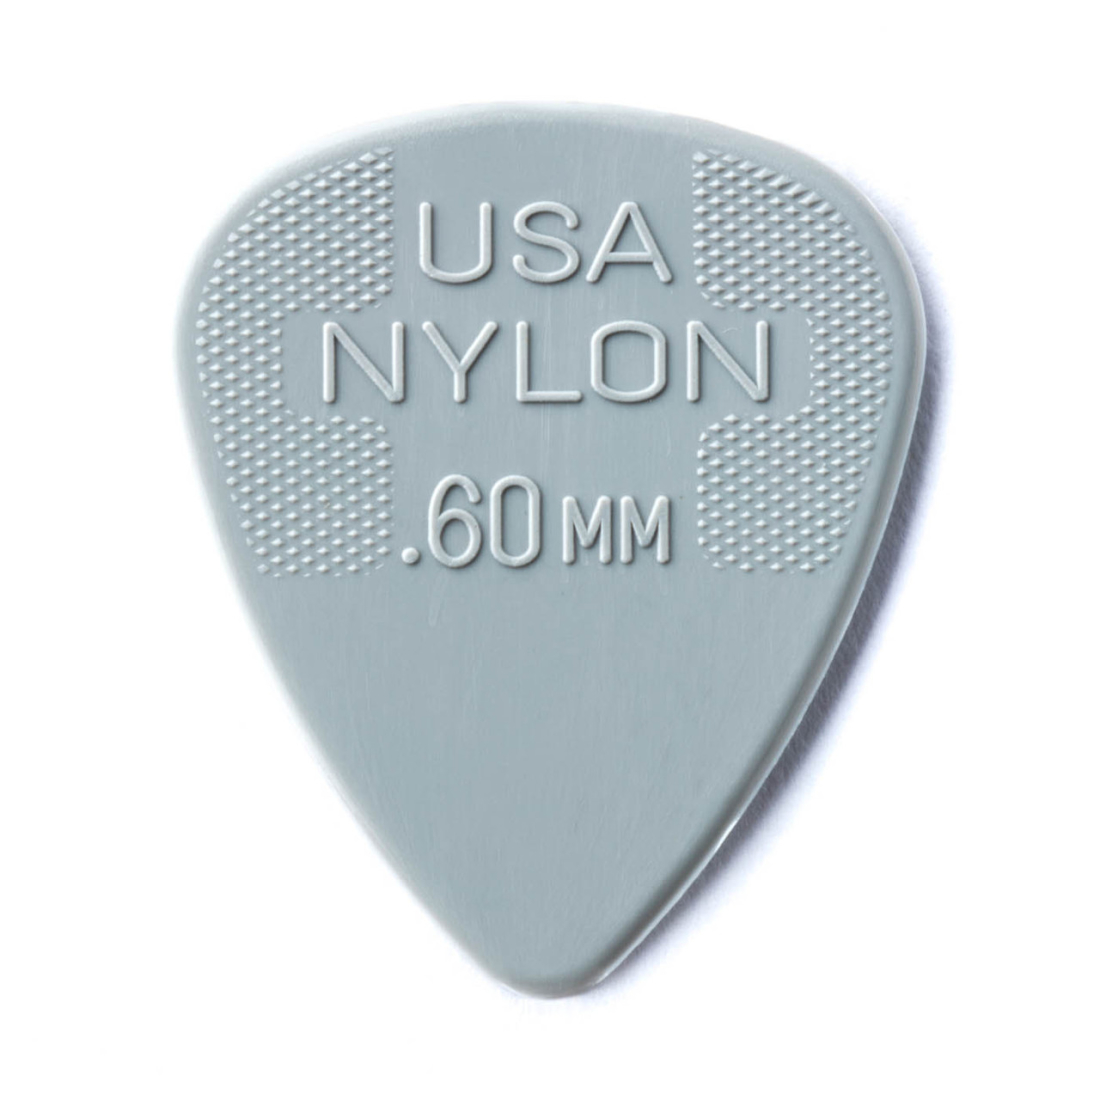 Nylon Standard Player Pack (12 Pack) - .60mm